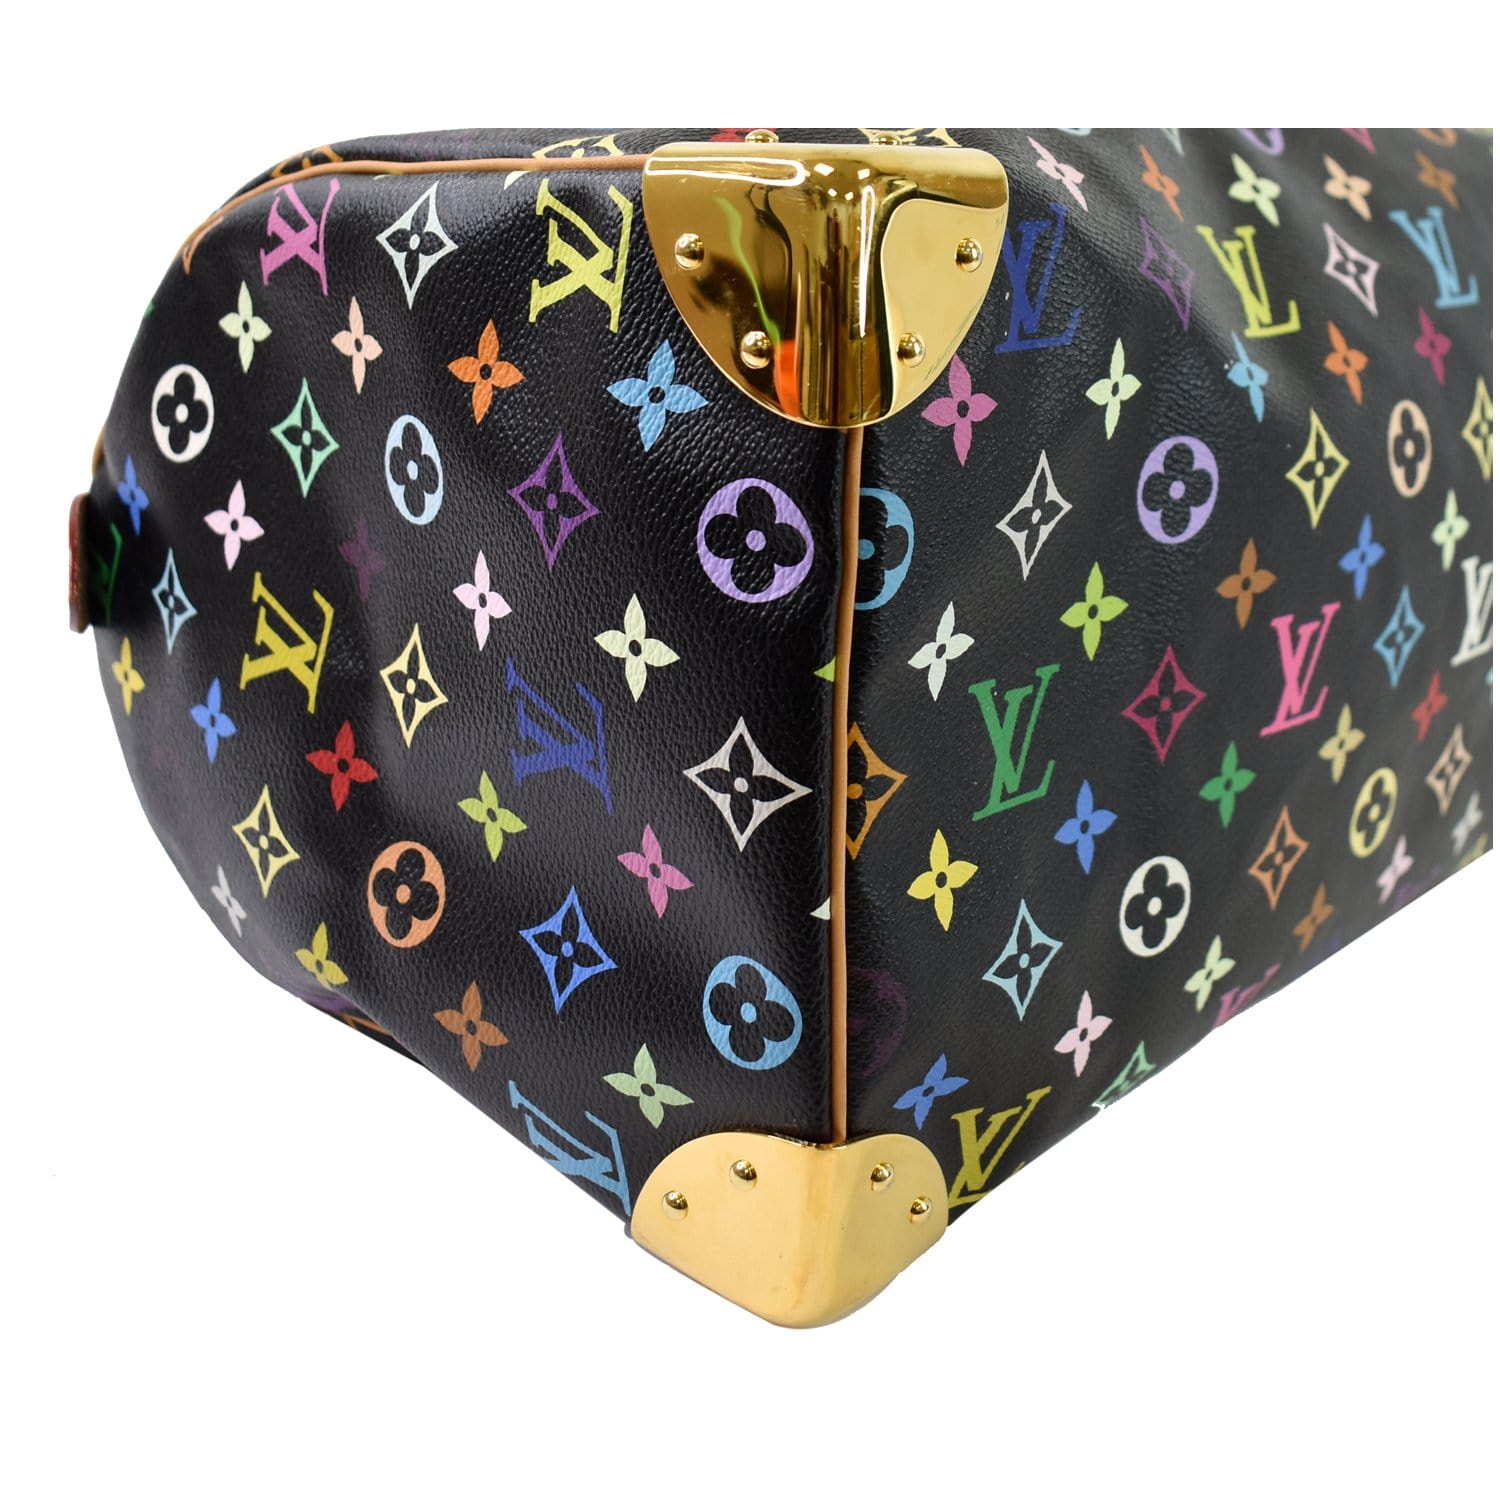 Louis Vuitton Monogram Multicolore Speedy 40, Louis Vuitton Handbags